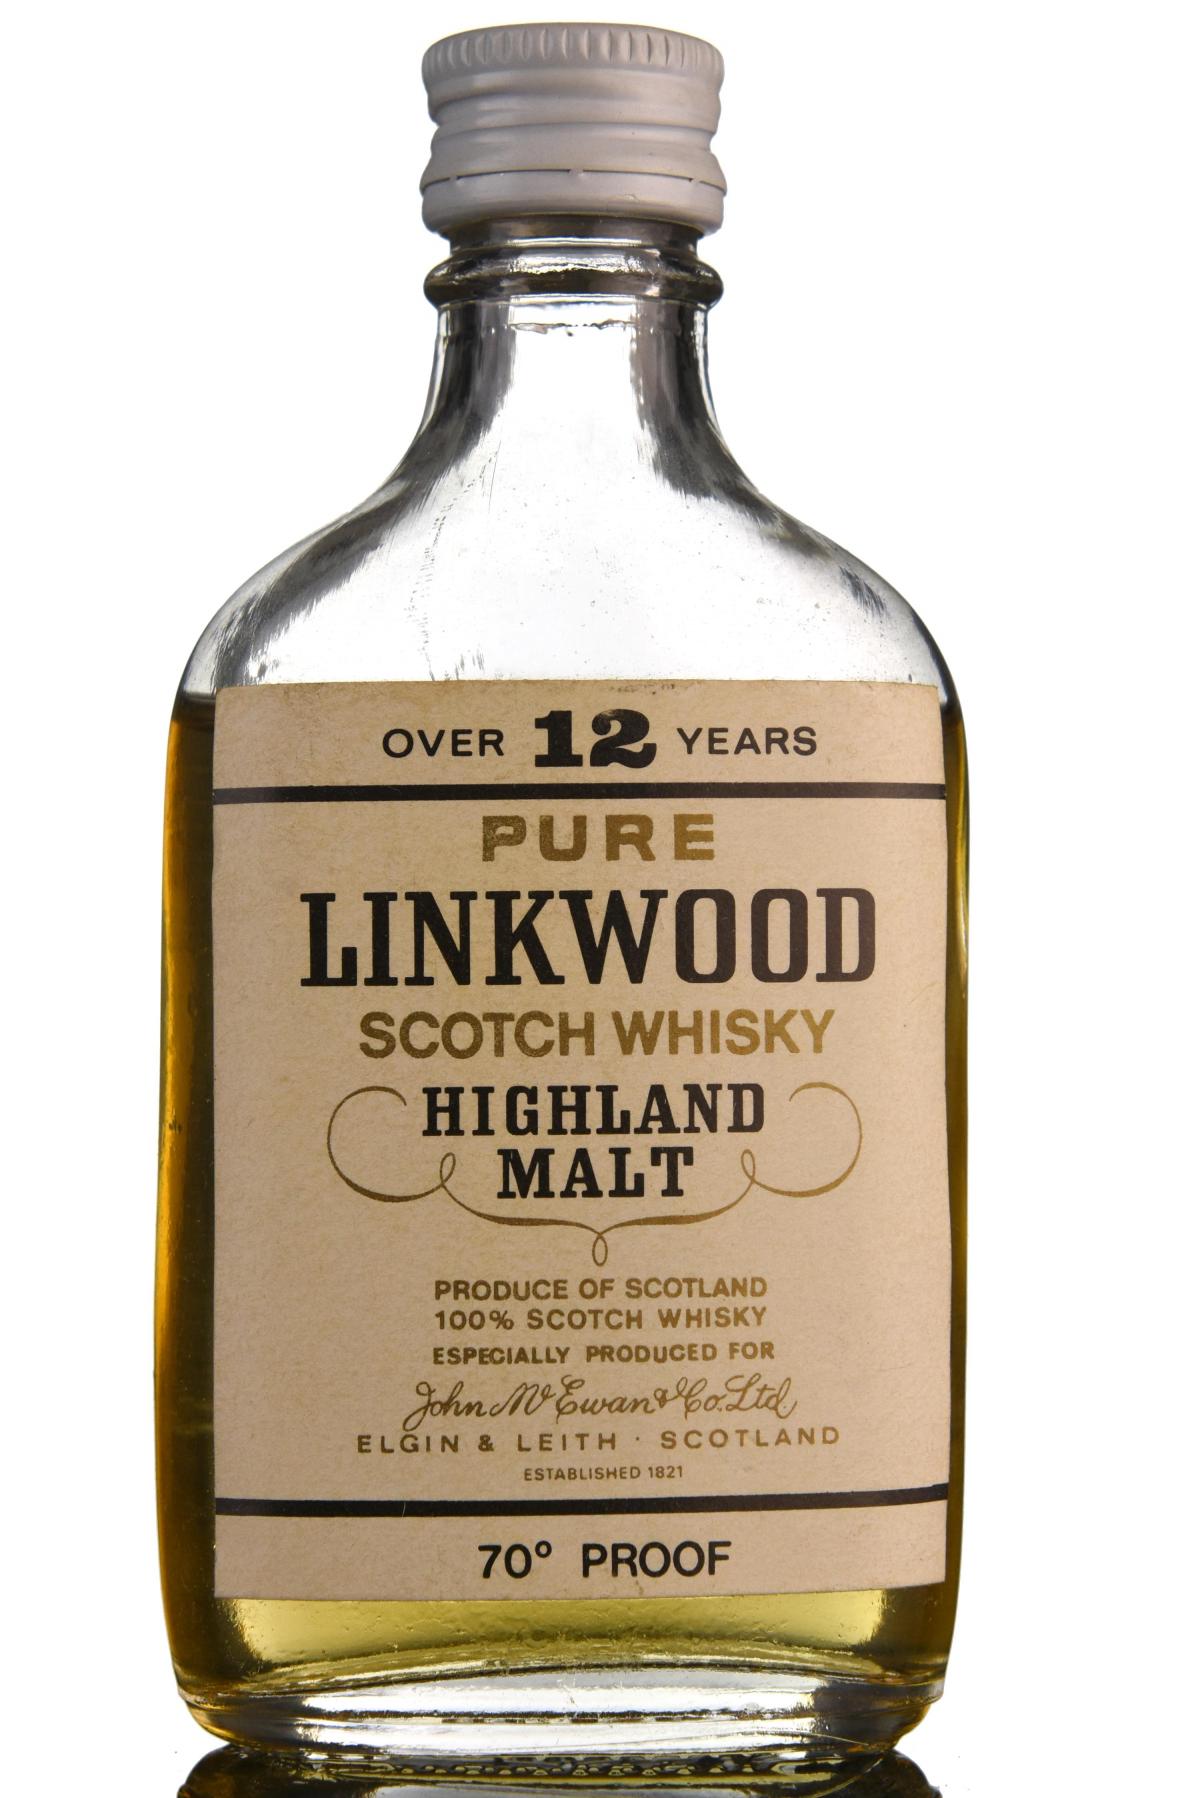 Linkwood 12 Year Old Miniature